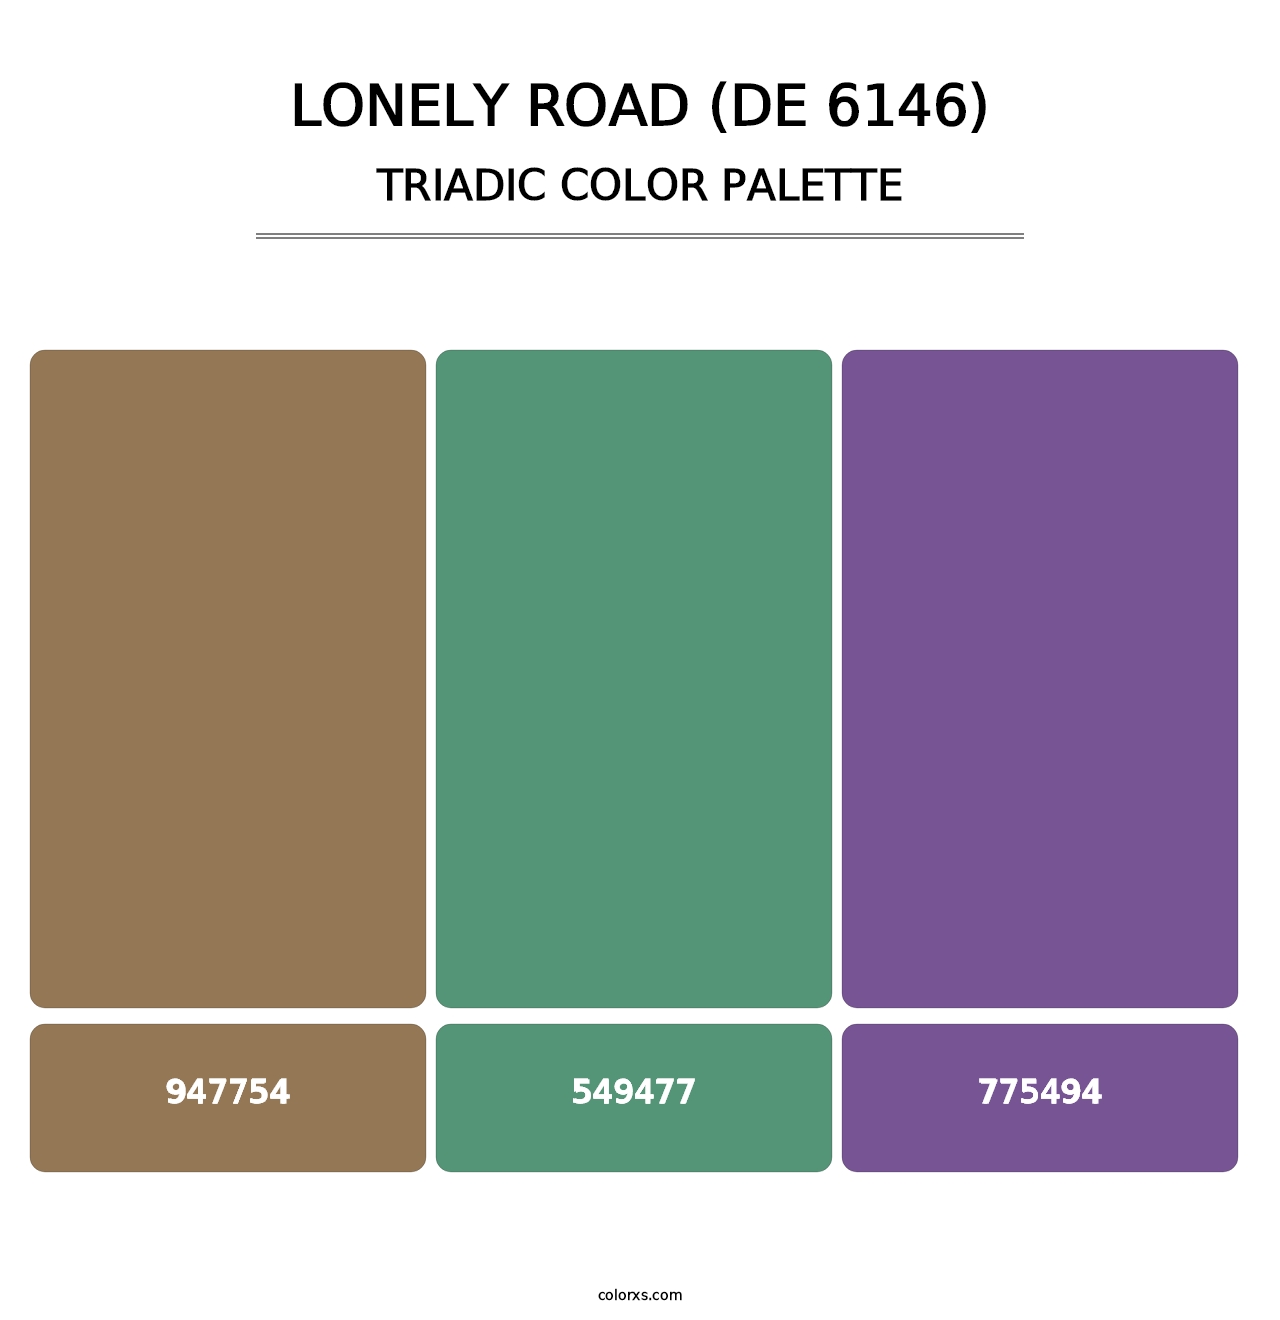 Lonely Road (DE 6146) - Triadic Color Palette